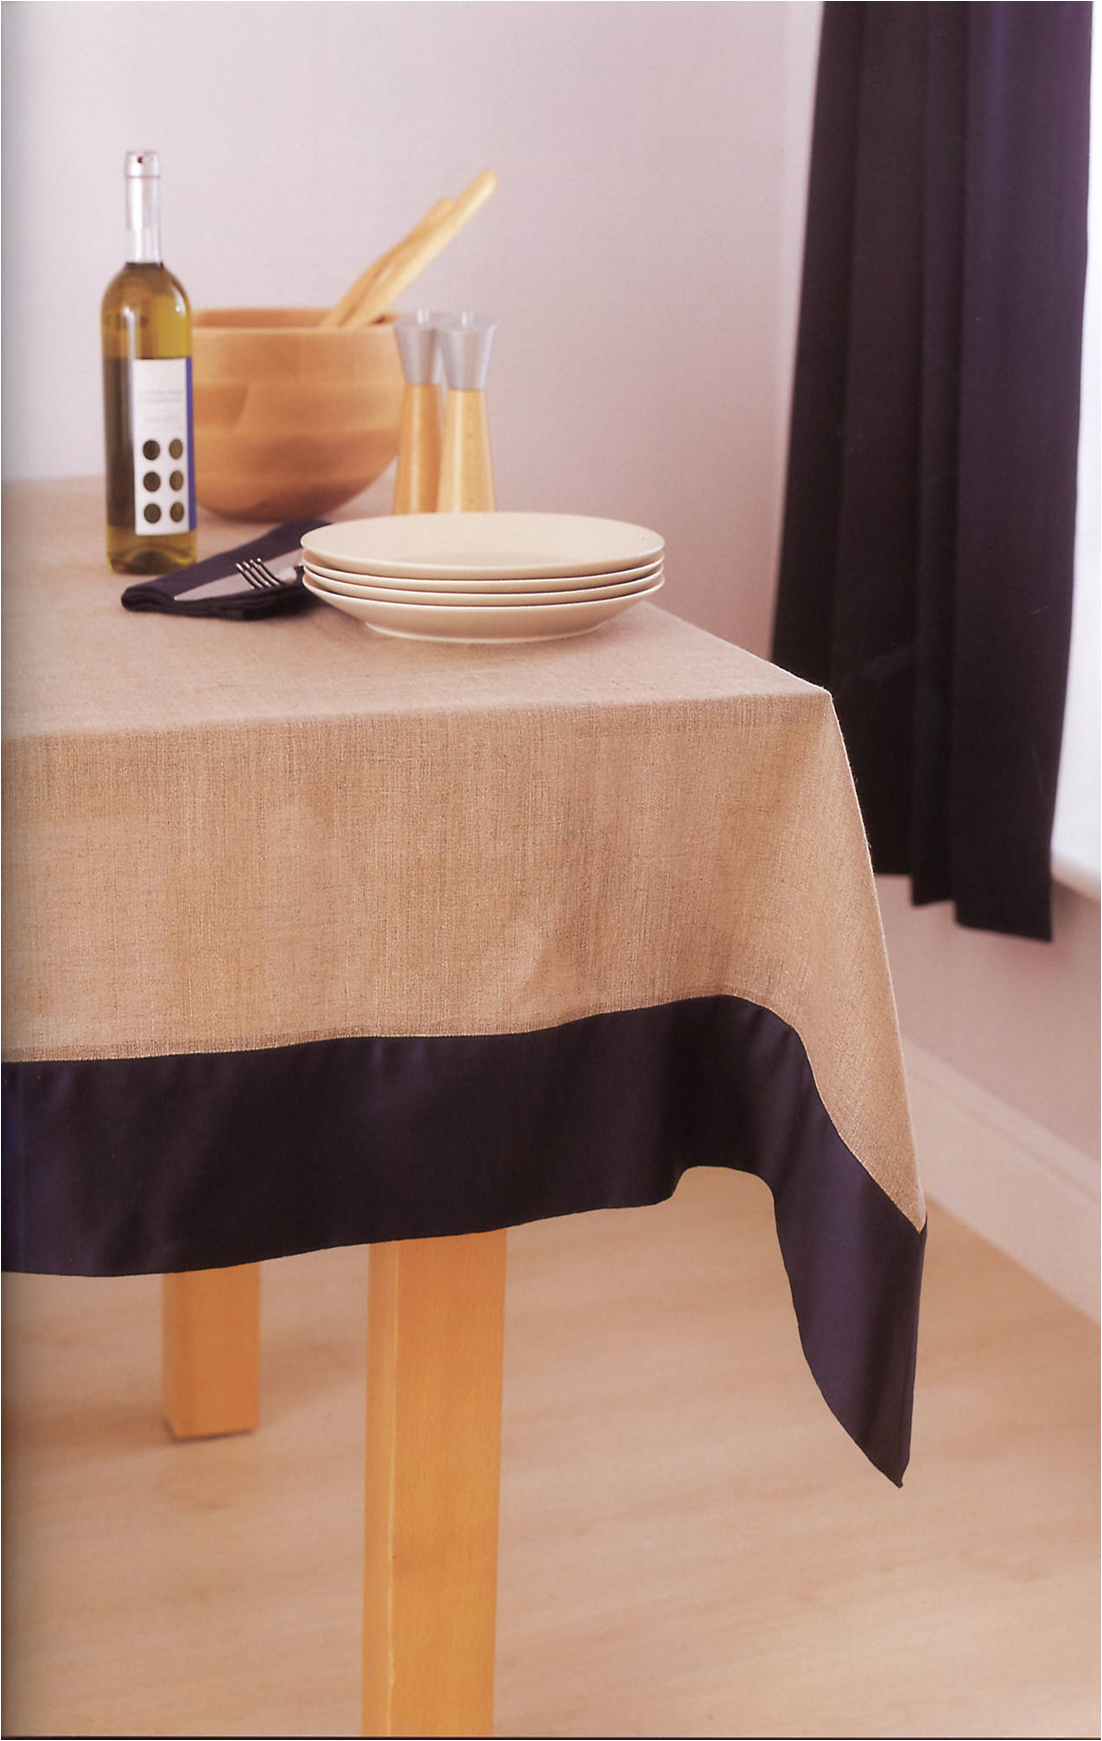 wedding tablecloths, holiday tablecloths, outdoor tablecloths, flannel backed vinyl kitchen tablecloths